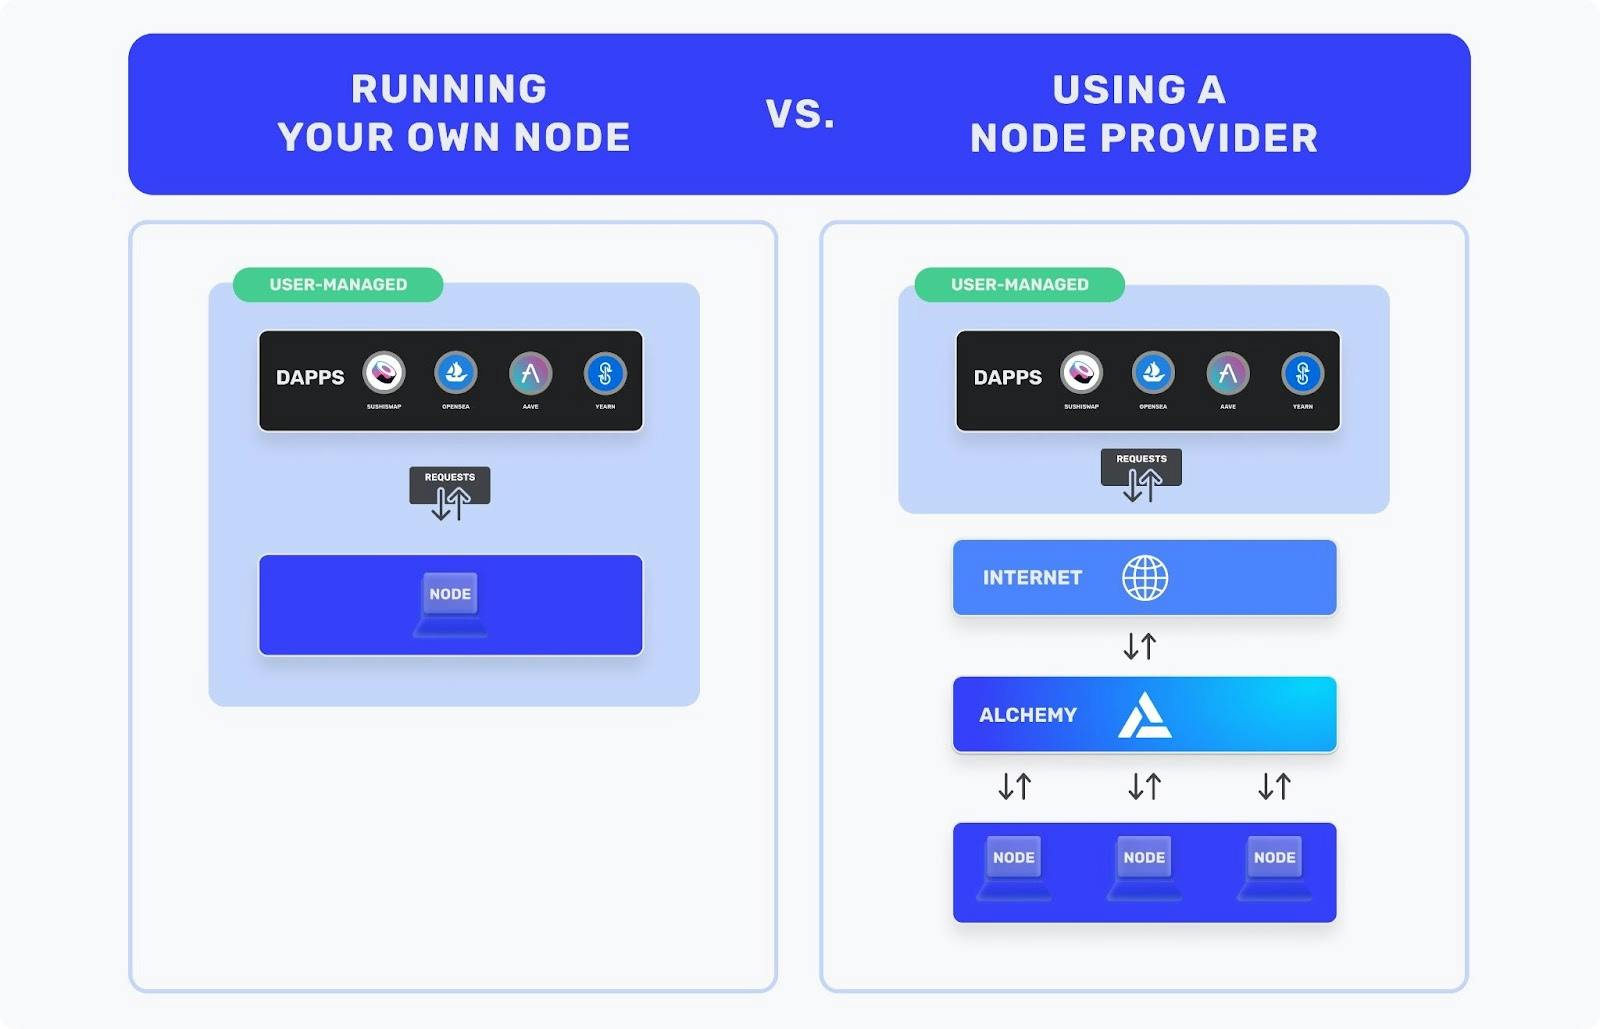 Running your own node vs. using a node provider